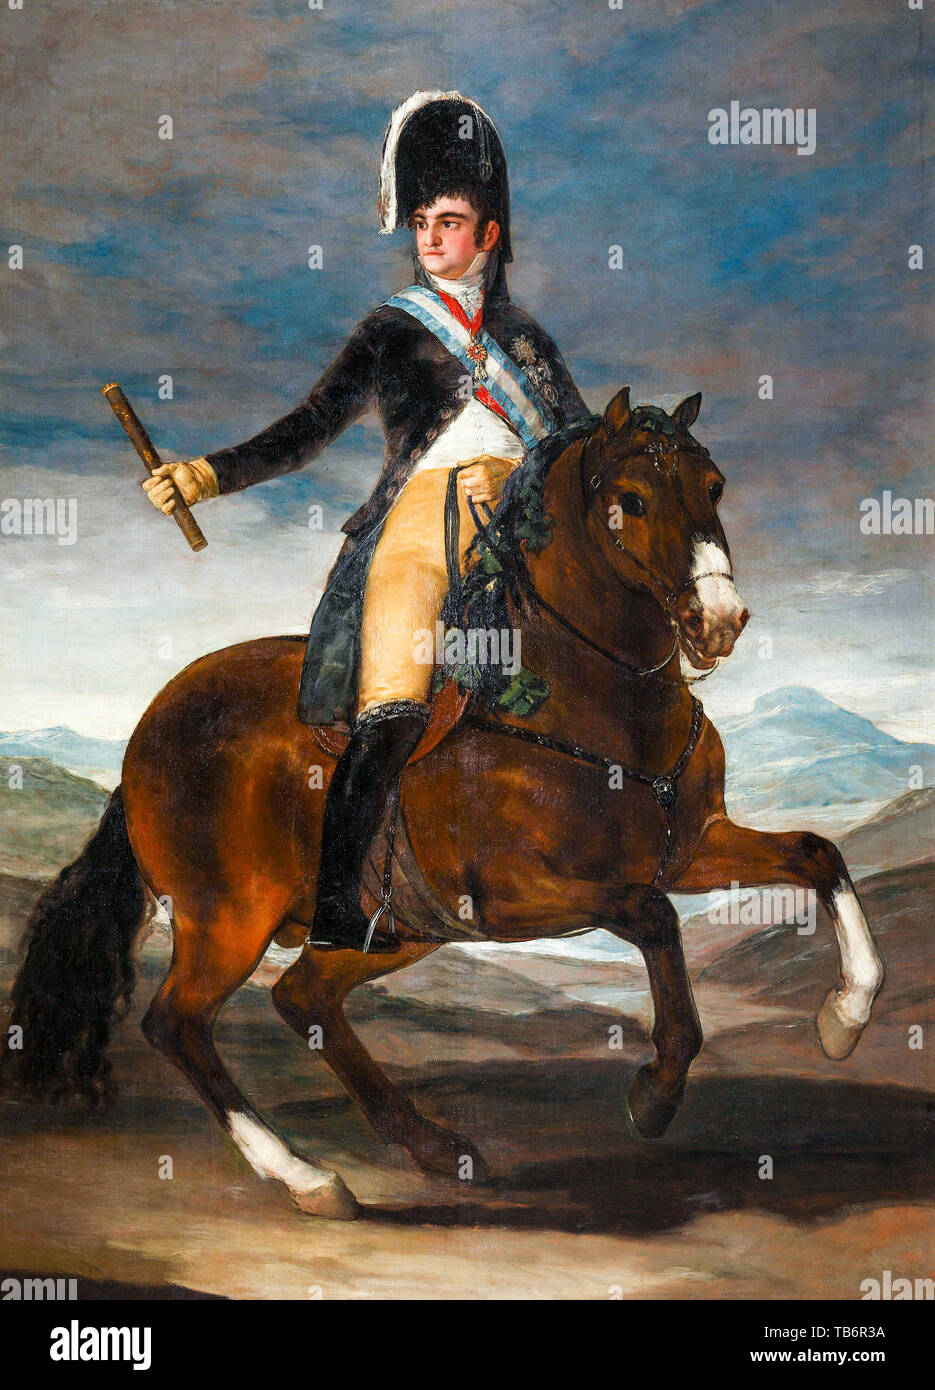 Francisco Goya, King Fernando VII of Spain (1784-1833) on horseback, equestrian portrait painting, 1808 Stock Photo